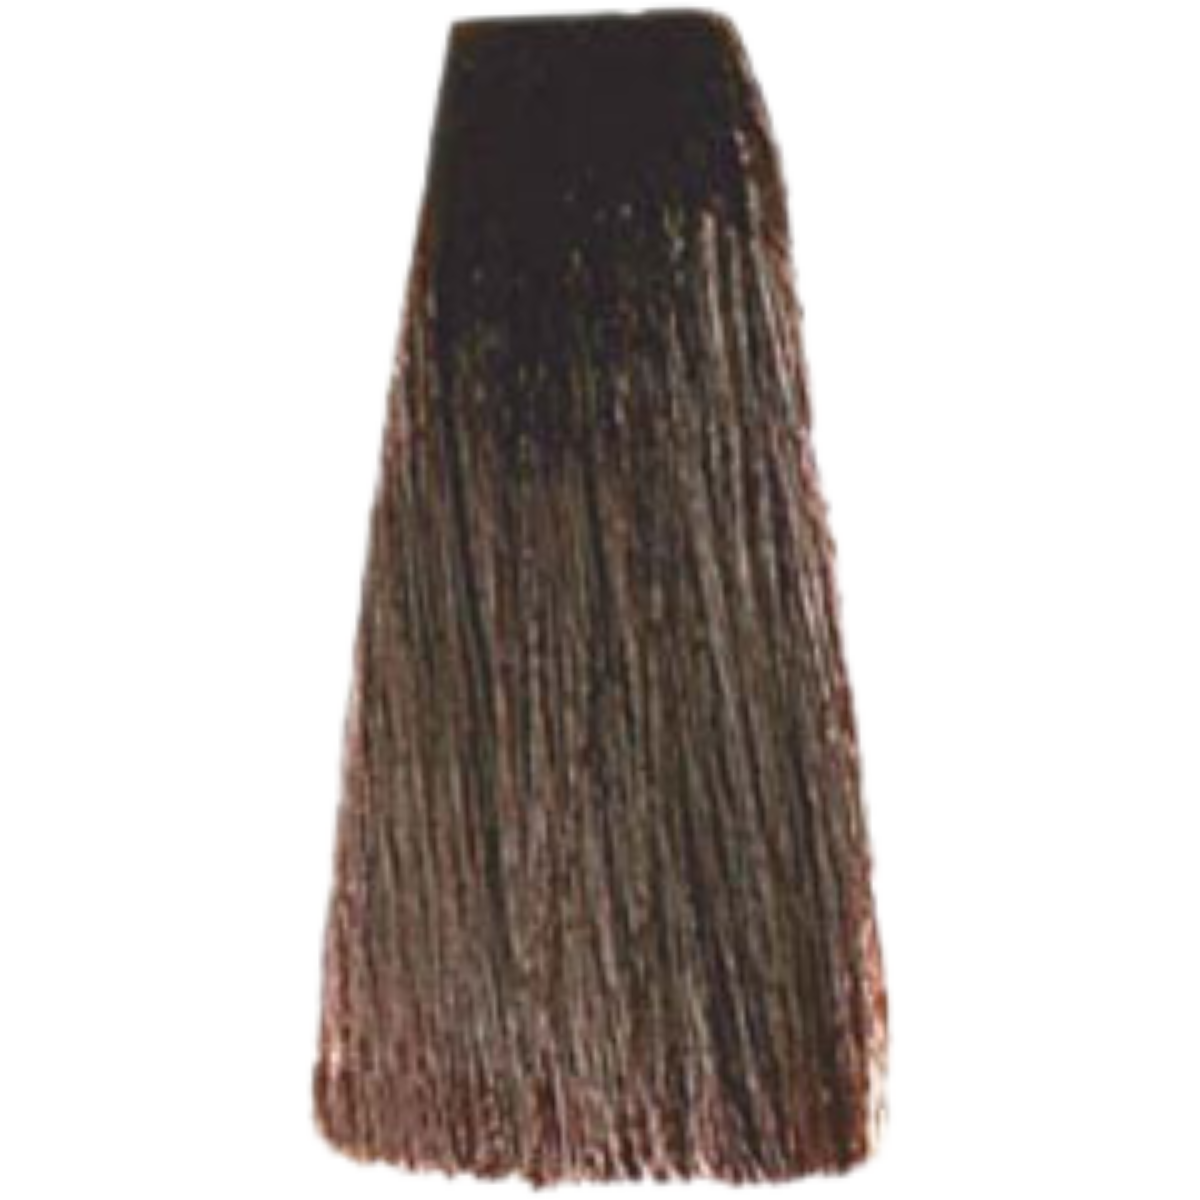 צבע שיער בסיס NATURALS DARK BLONDE 6.0 פארמויטה FarmaVita צבע לשיער 100 גרם